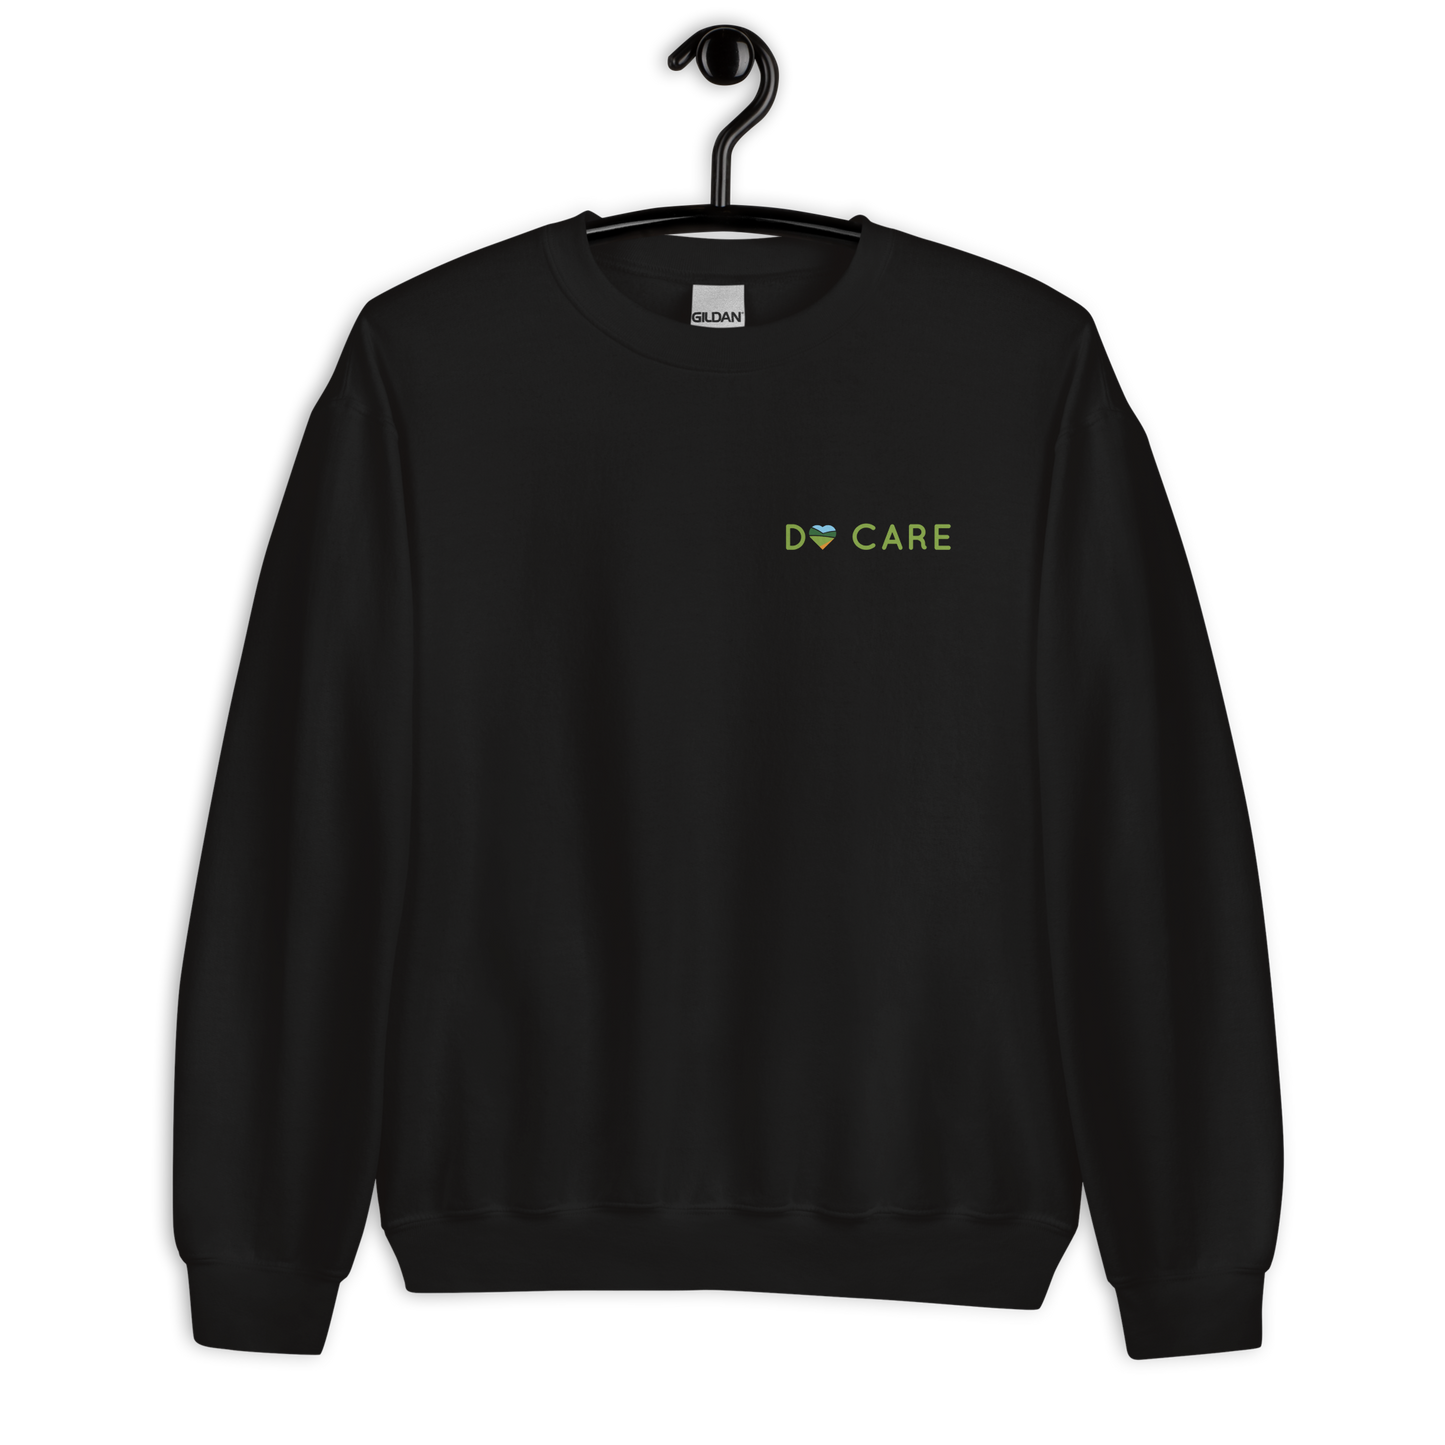 Do Care Sweatshirt